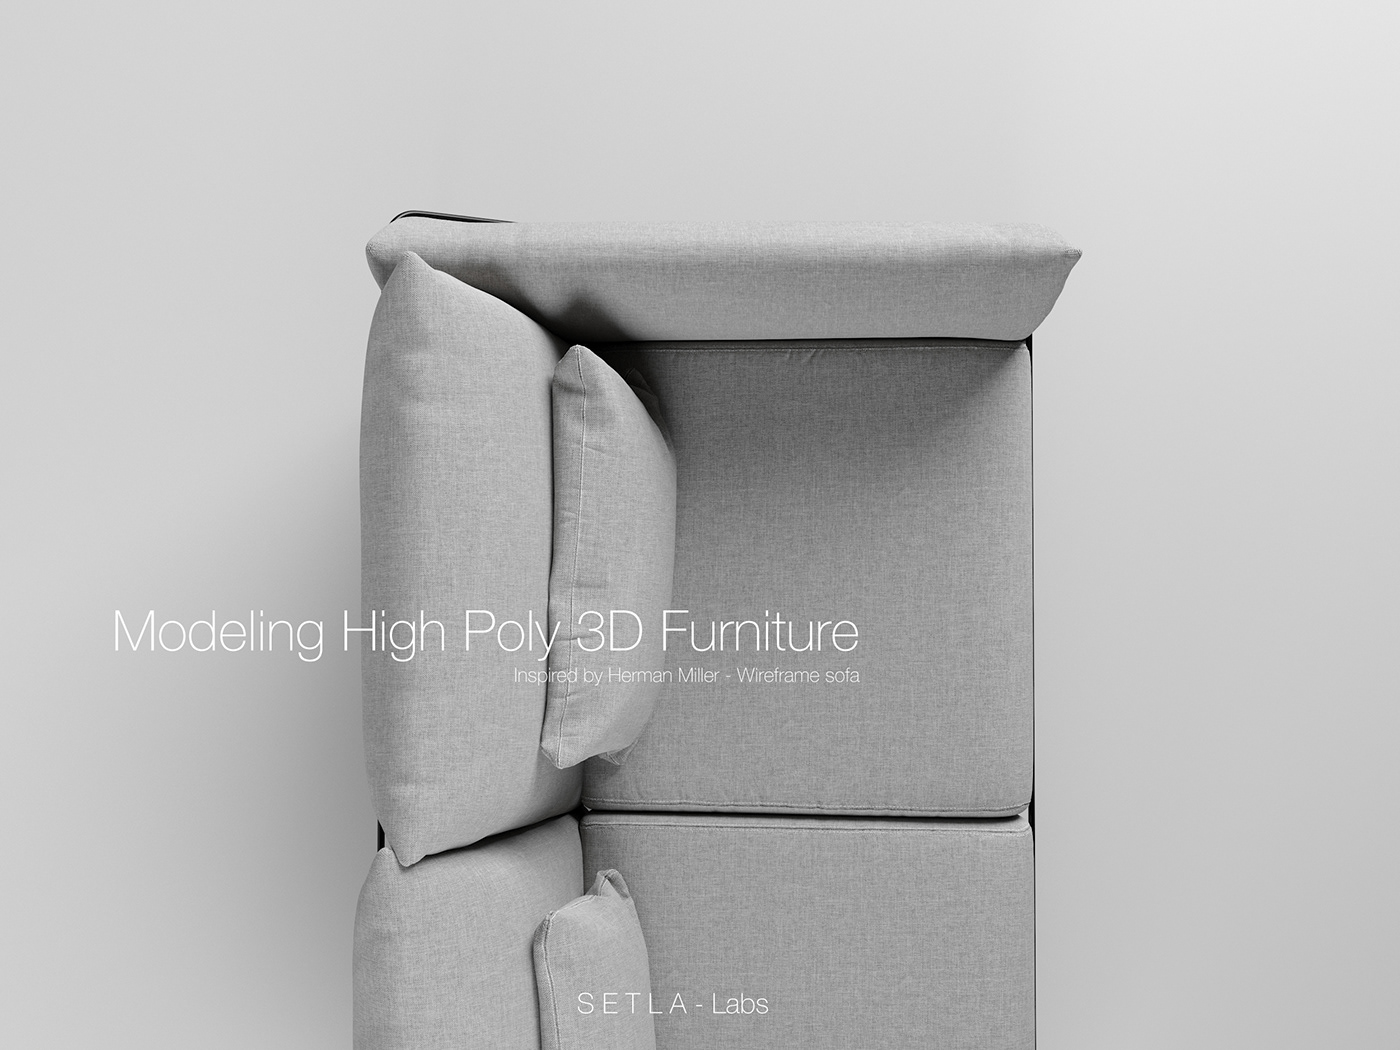 free 3D model corona 3ds max download furniture wireframe sofa Herman Miller